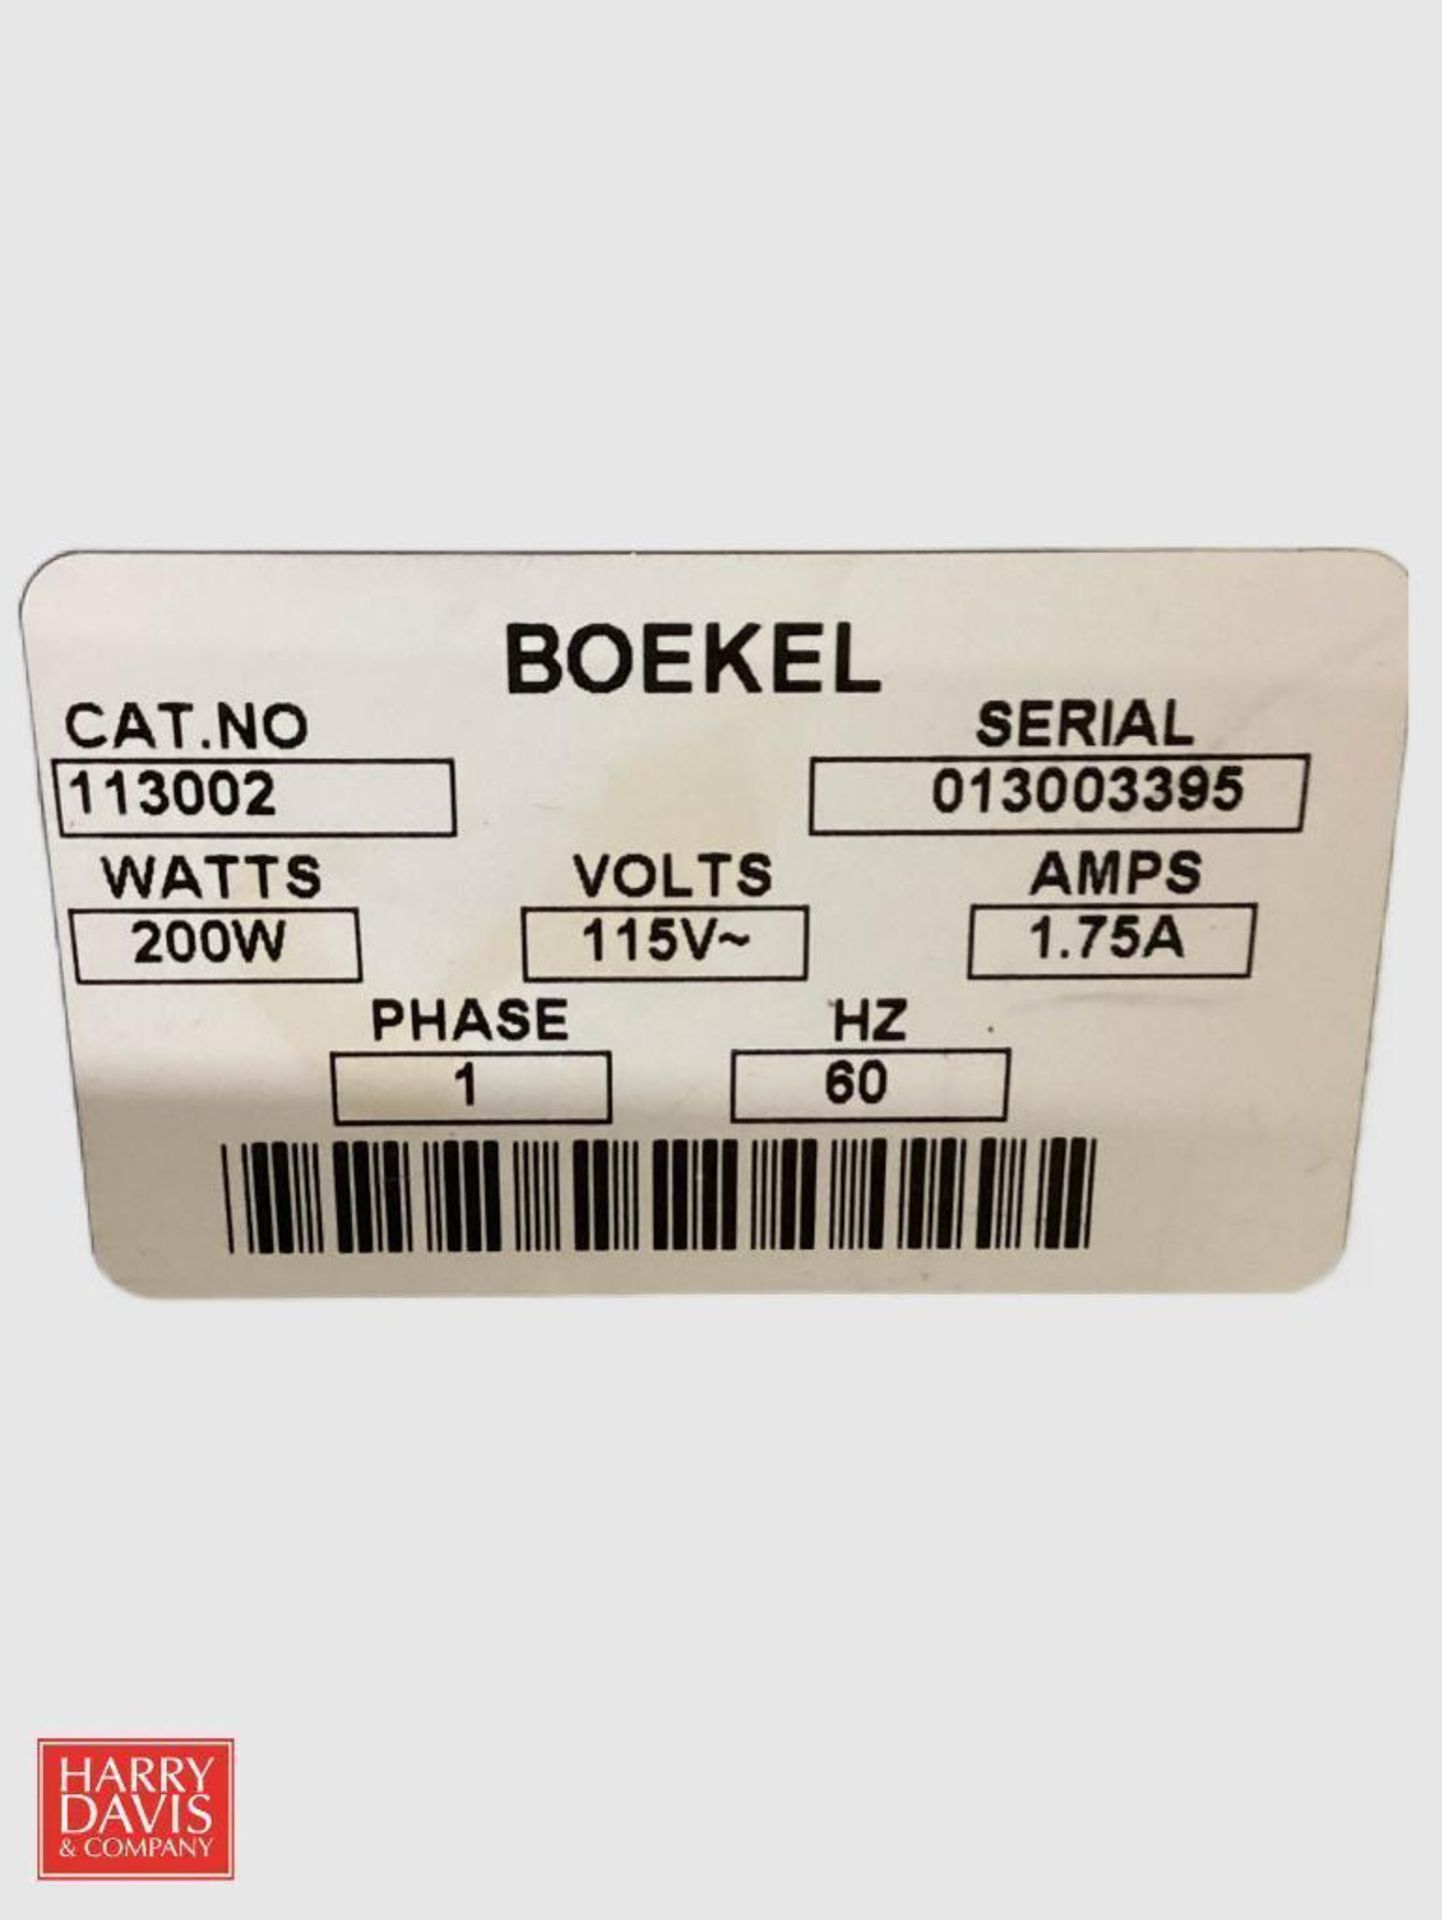 Boekel 113002 Digital Dry Bath Incubator / Block Heater - Image 3 of 3